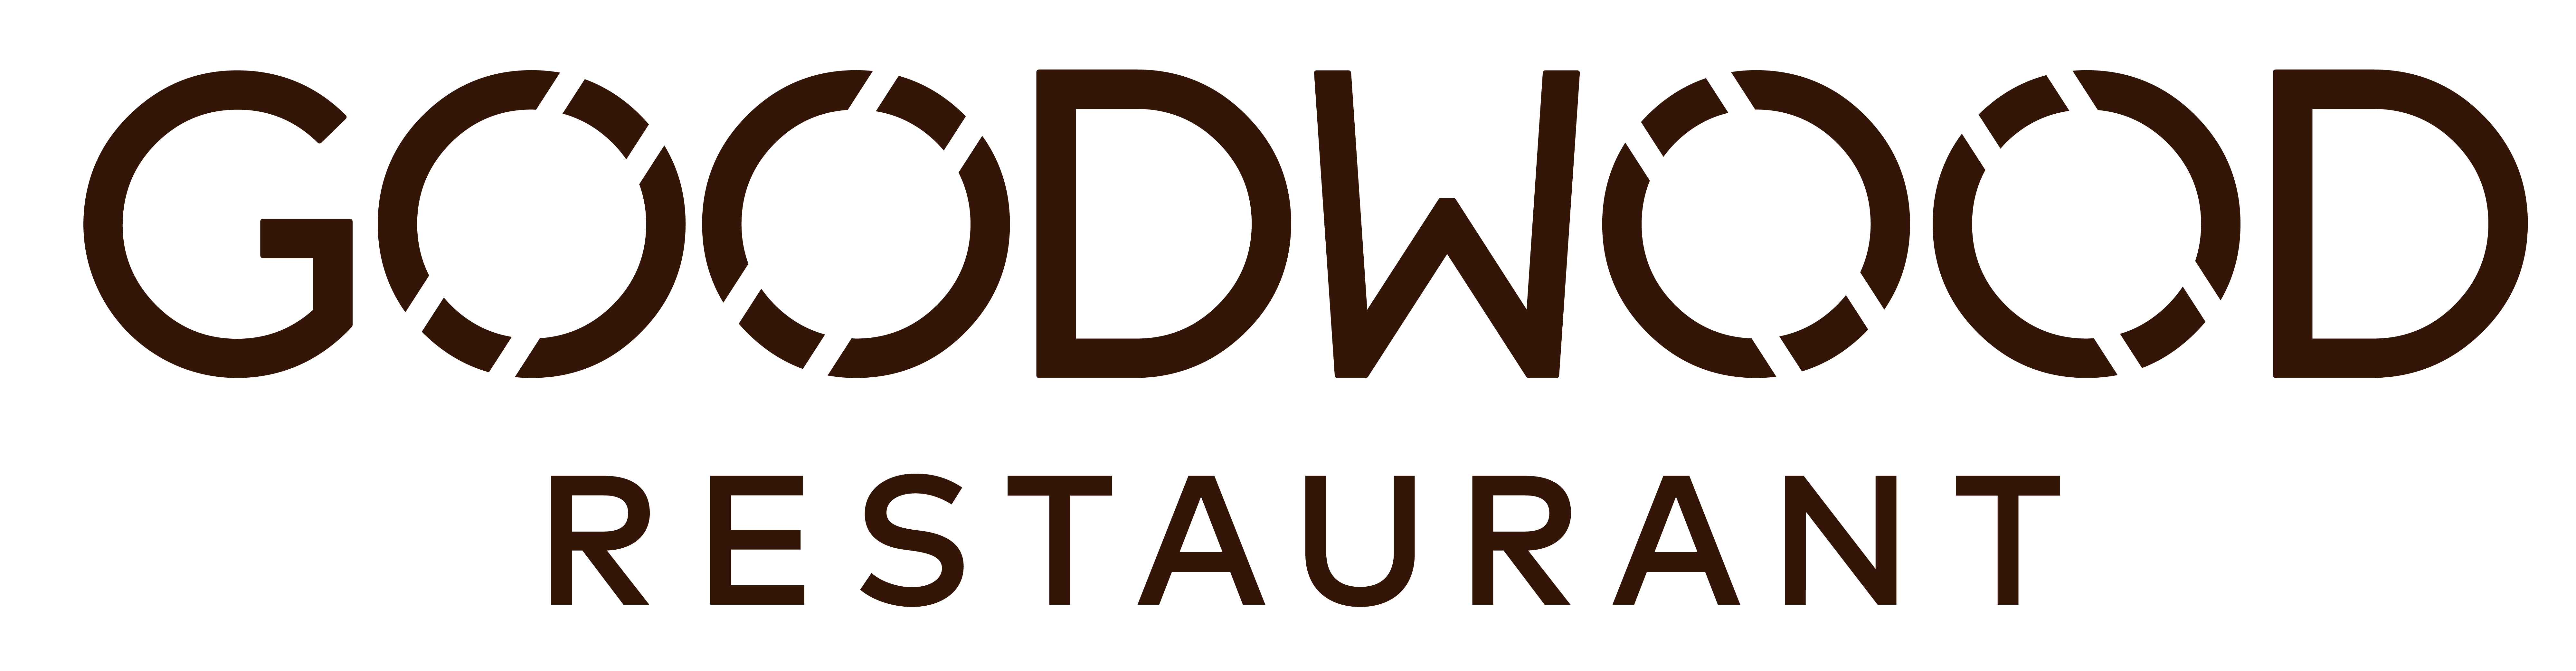 Goodwood Restaurant